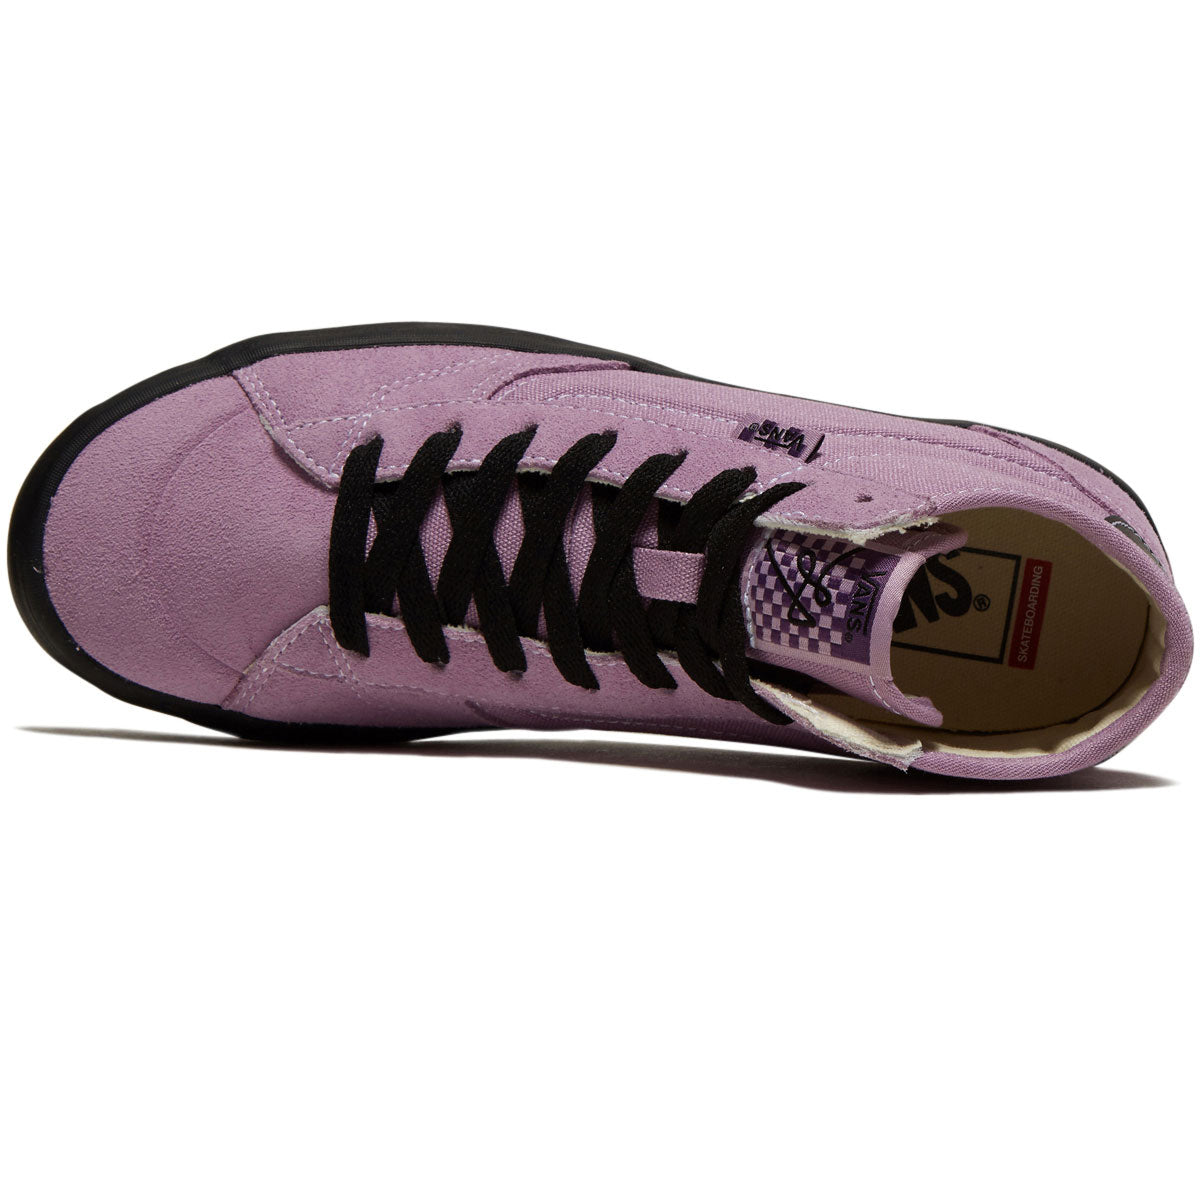 Vans The Lizzie Shoes - Lavender Fog/Black image 3